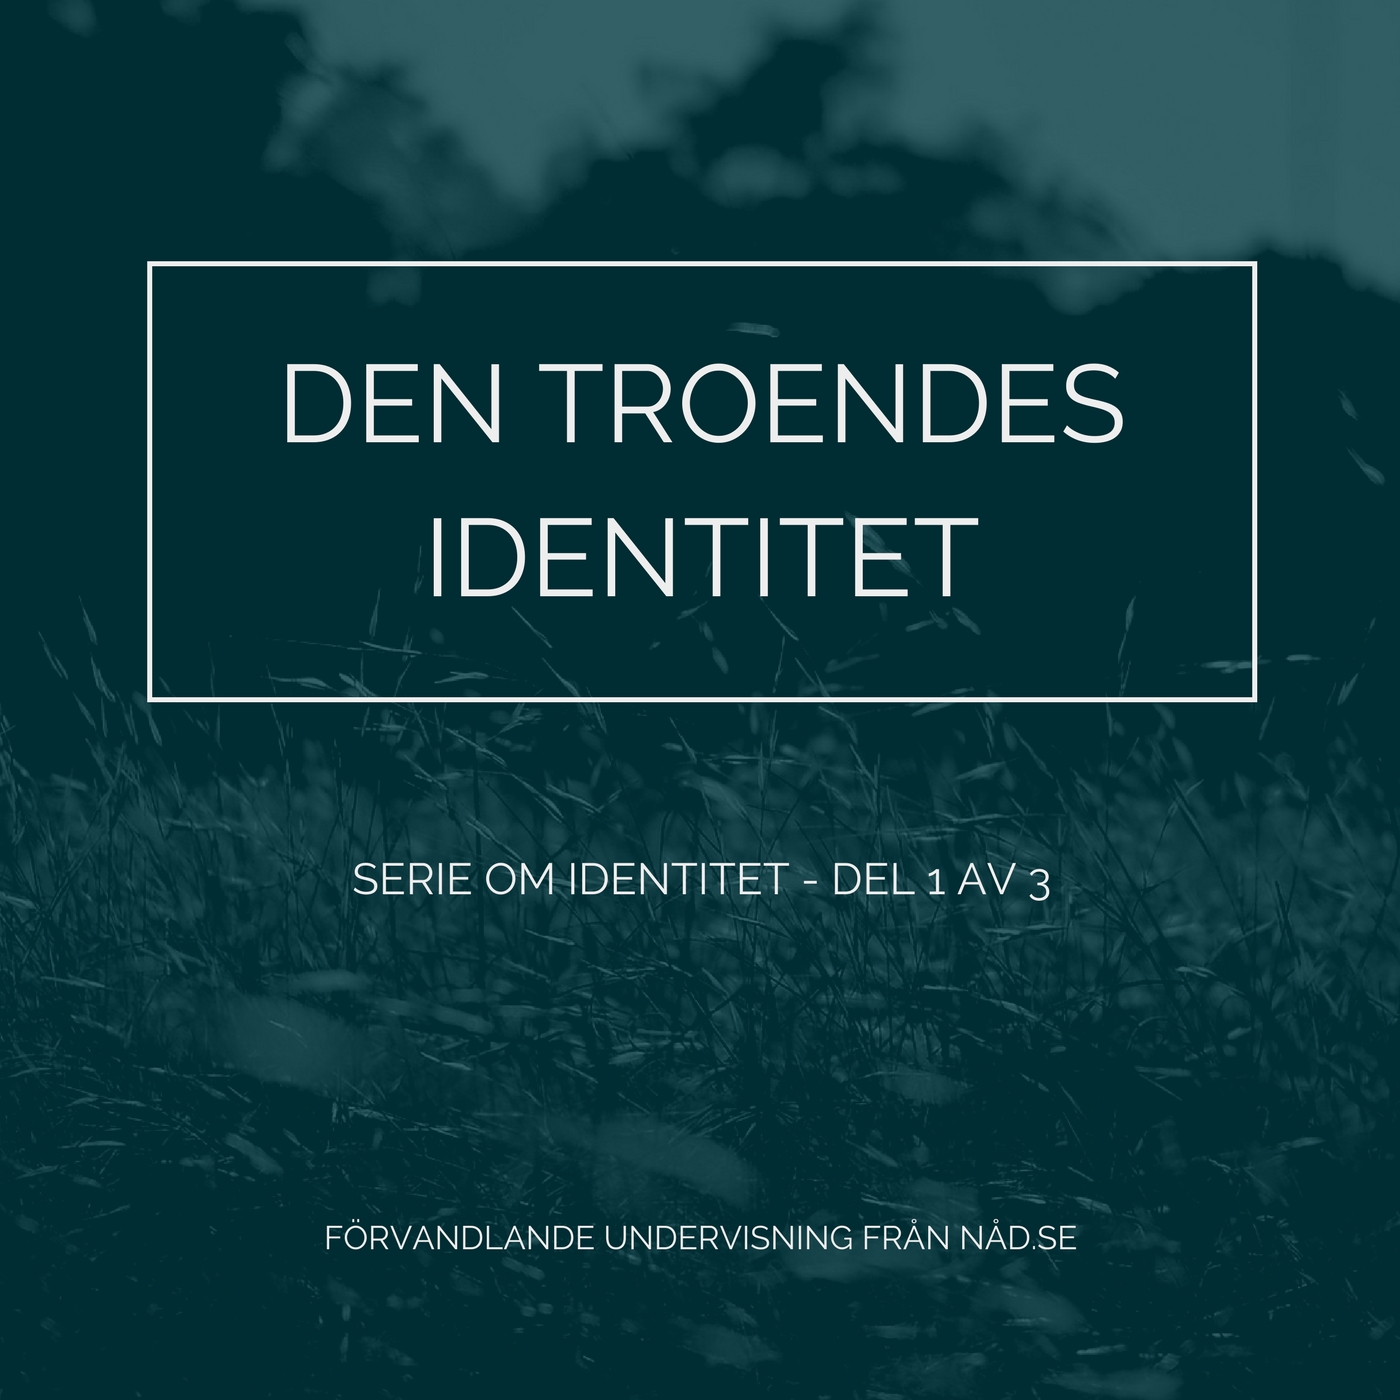 Den troendes identitet (Identitet Del1)